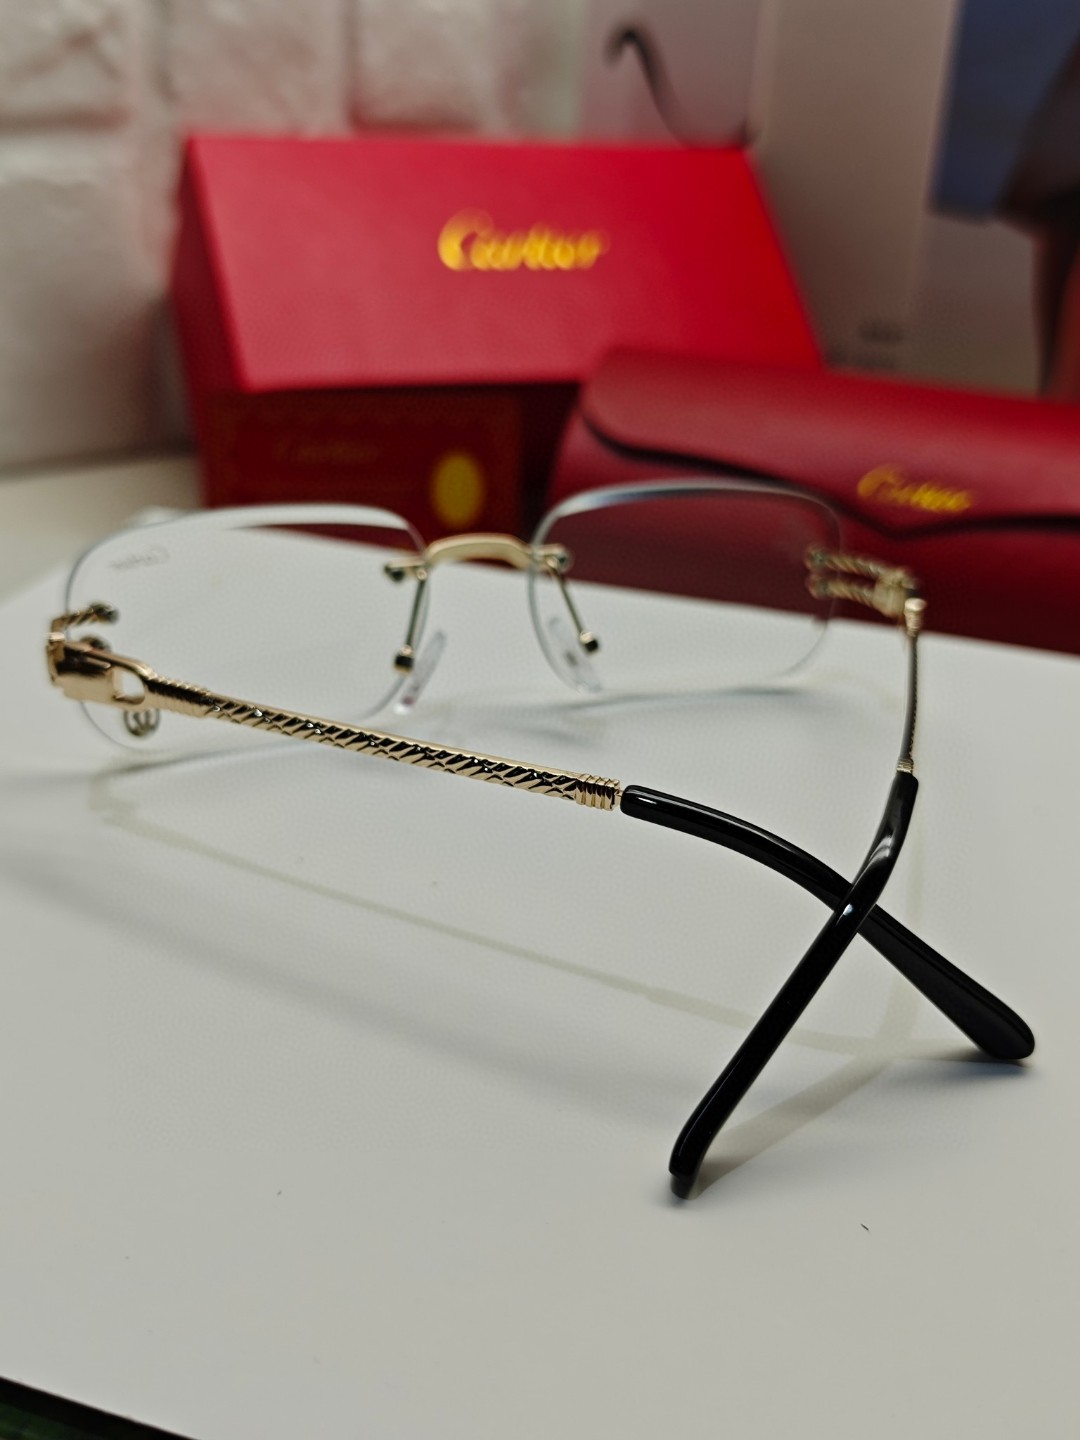 cartier卡地亚新款豹子图案时尚高贵很美手工高端品质男女通用太阳眼镜经典之作有分量有质感的一款太阳镜